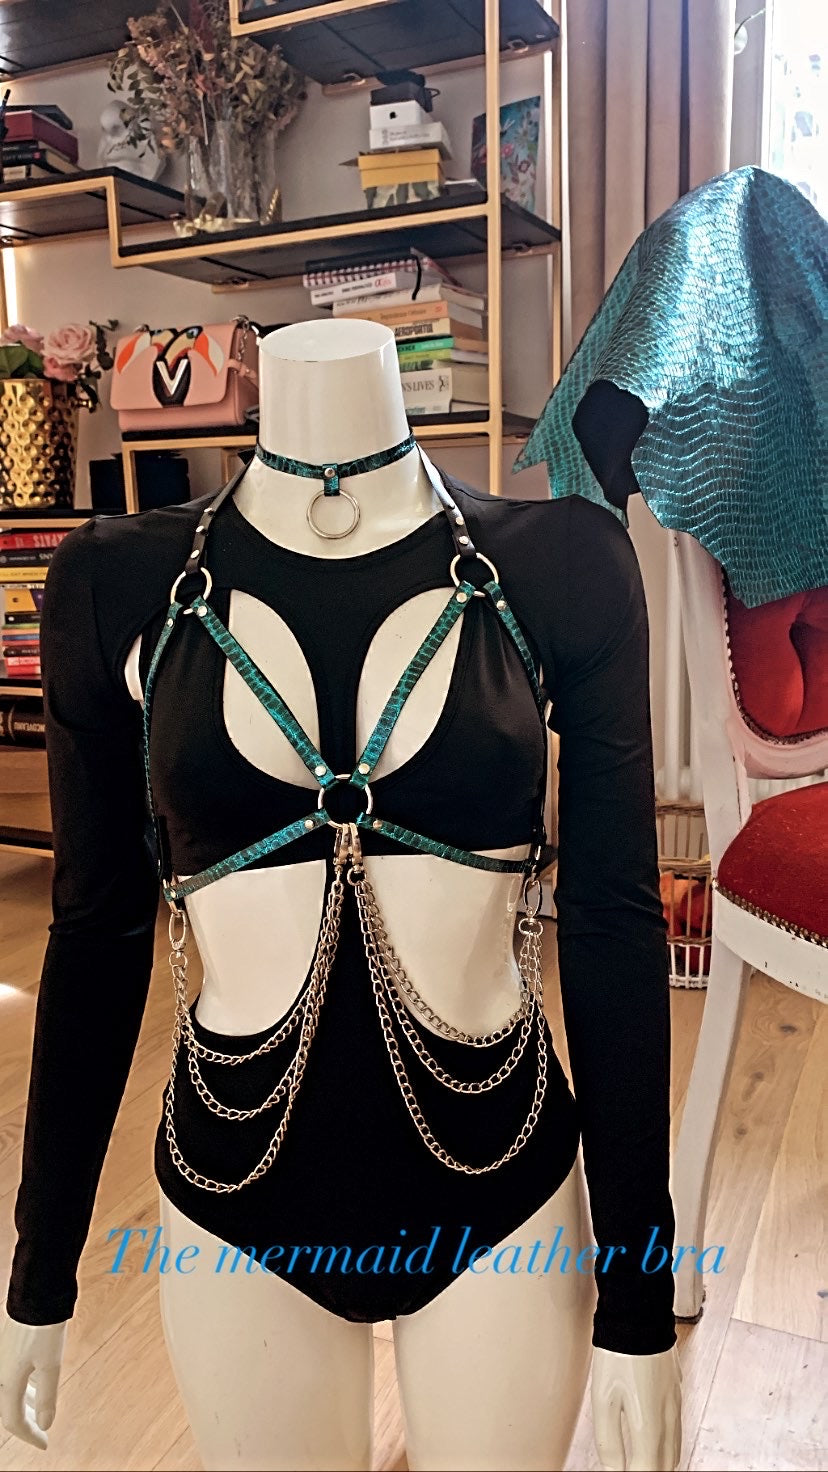 Mermaid bra leather harness with choker